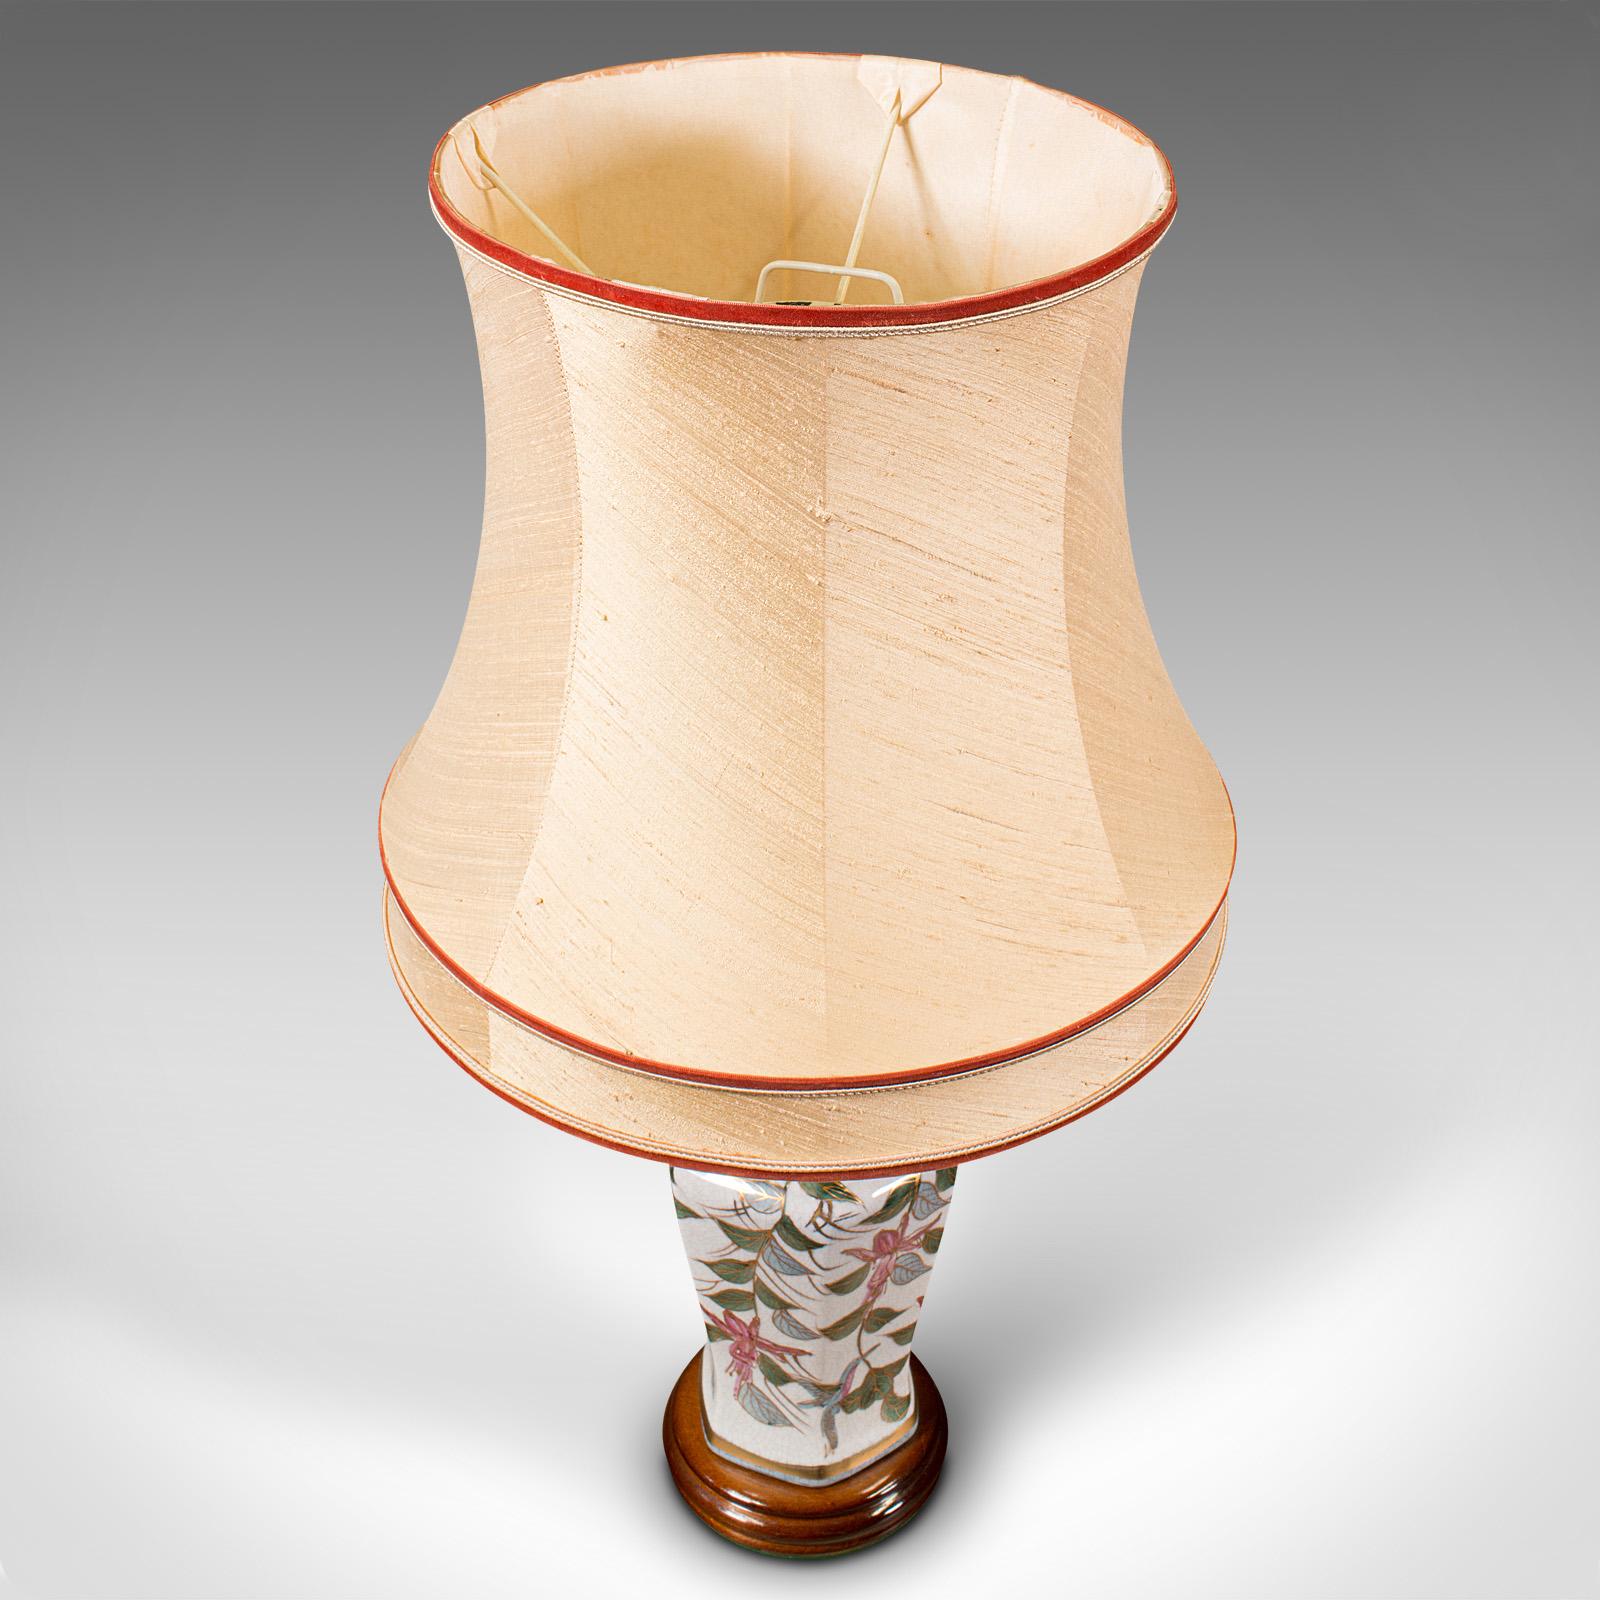 Vintage Table Lamp, Chinese, Ceramic, Decorative Light, Art Deco, Circa 1940 For Sale 8